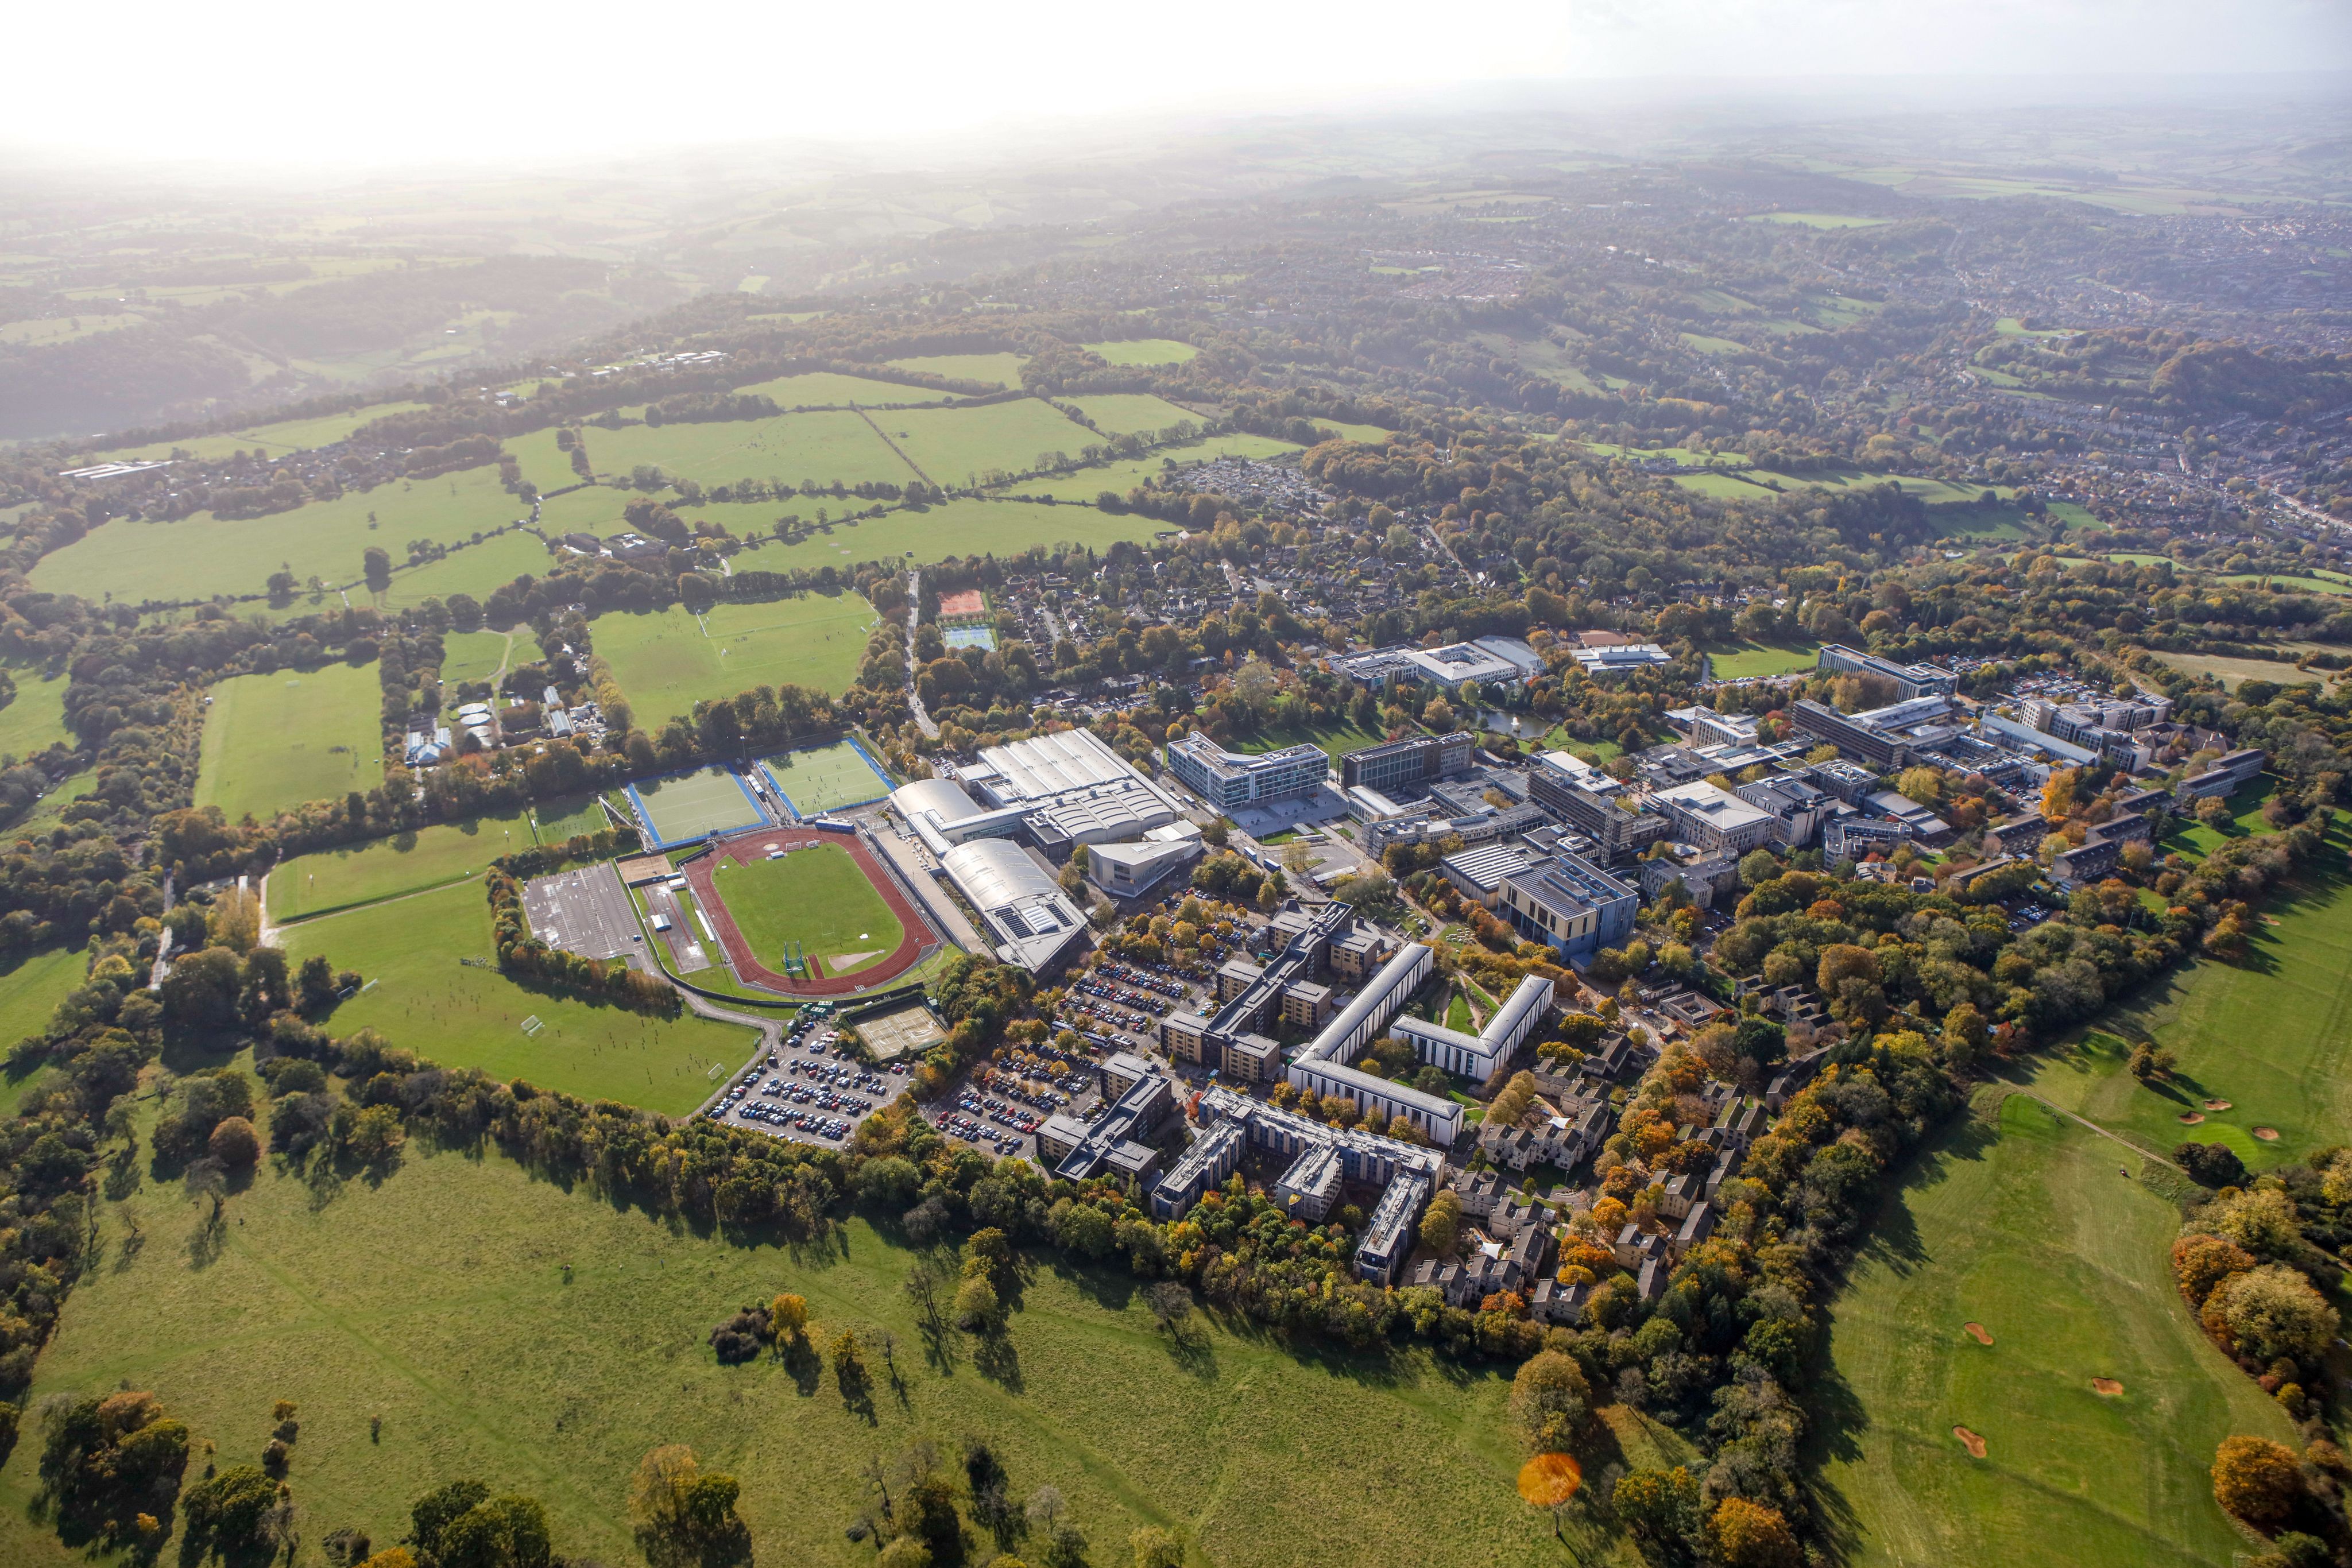 Aerial view of Claverton Down campus